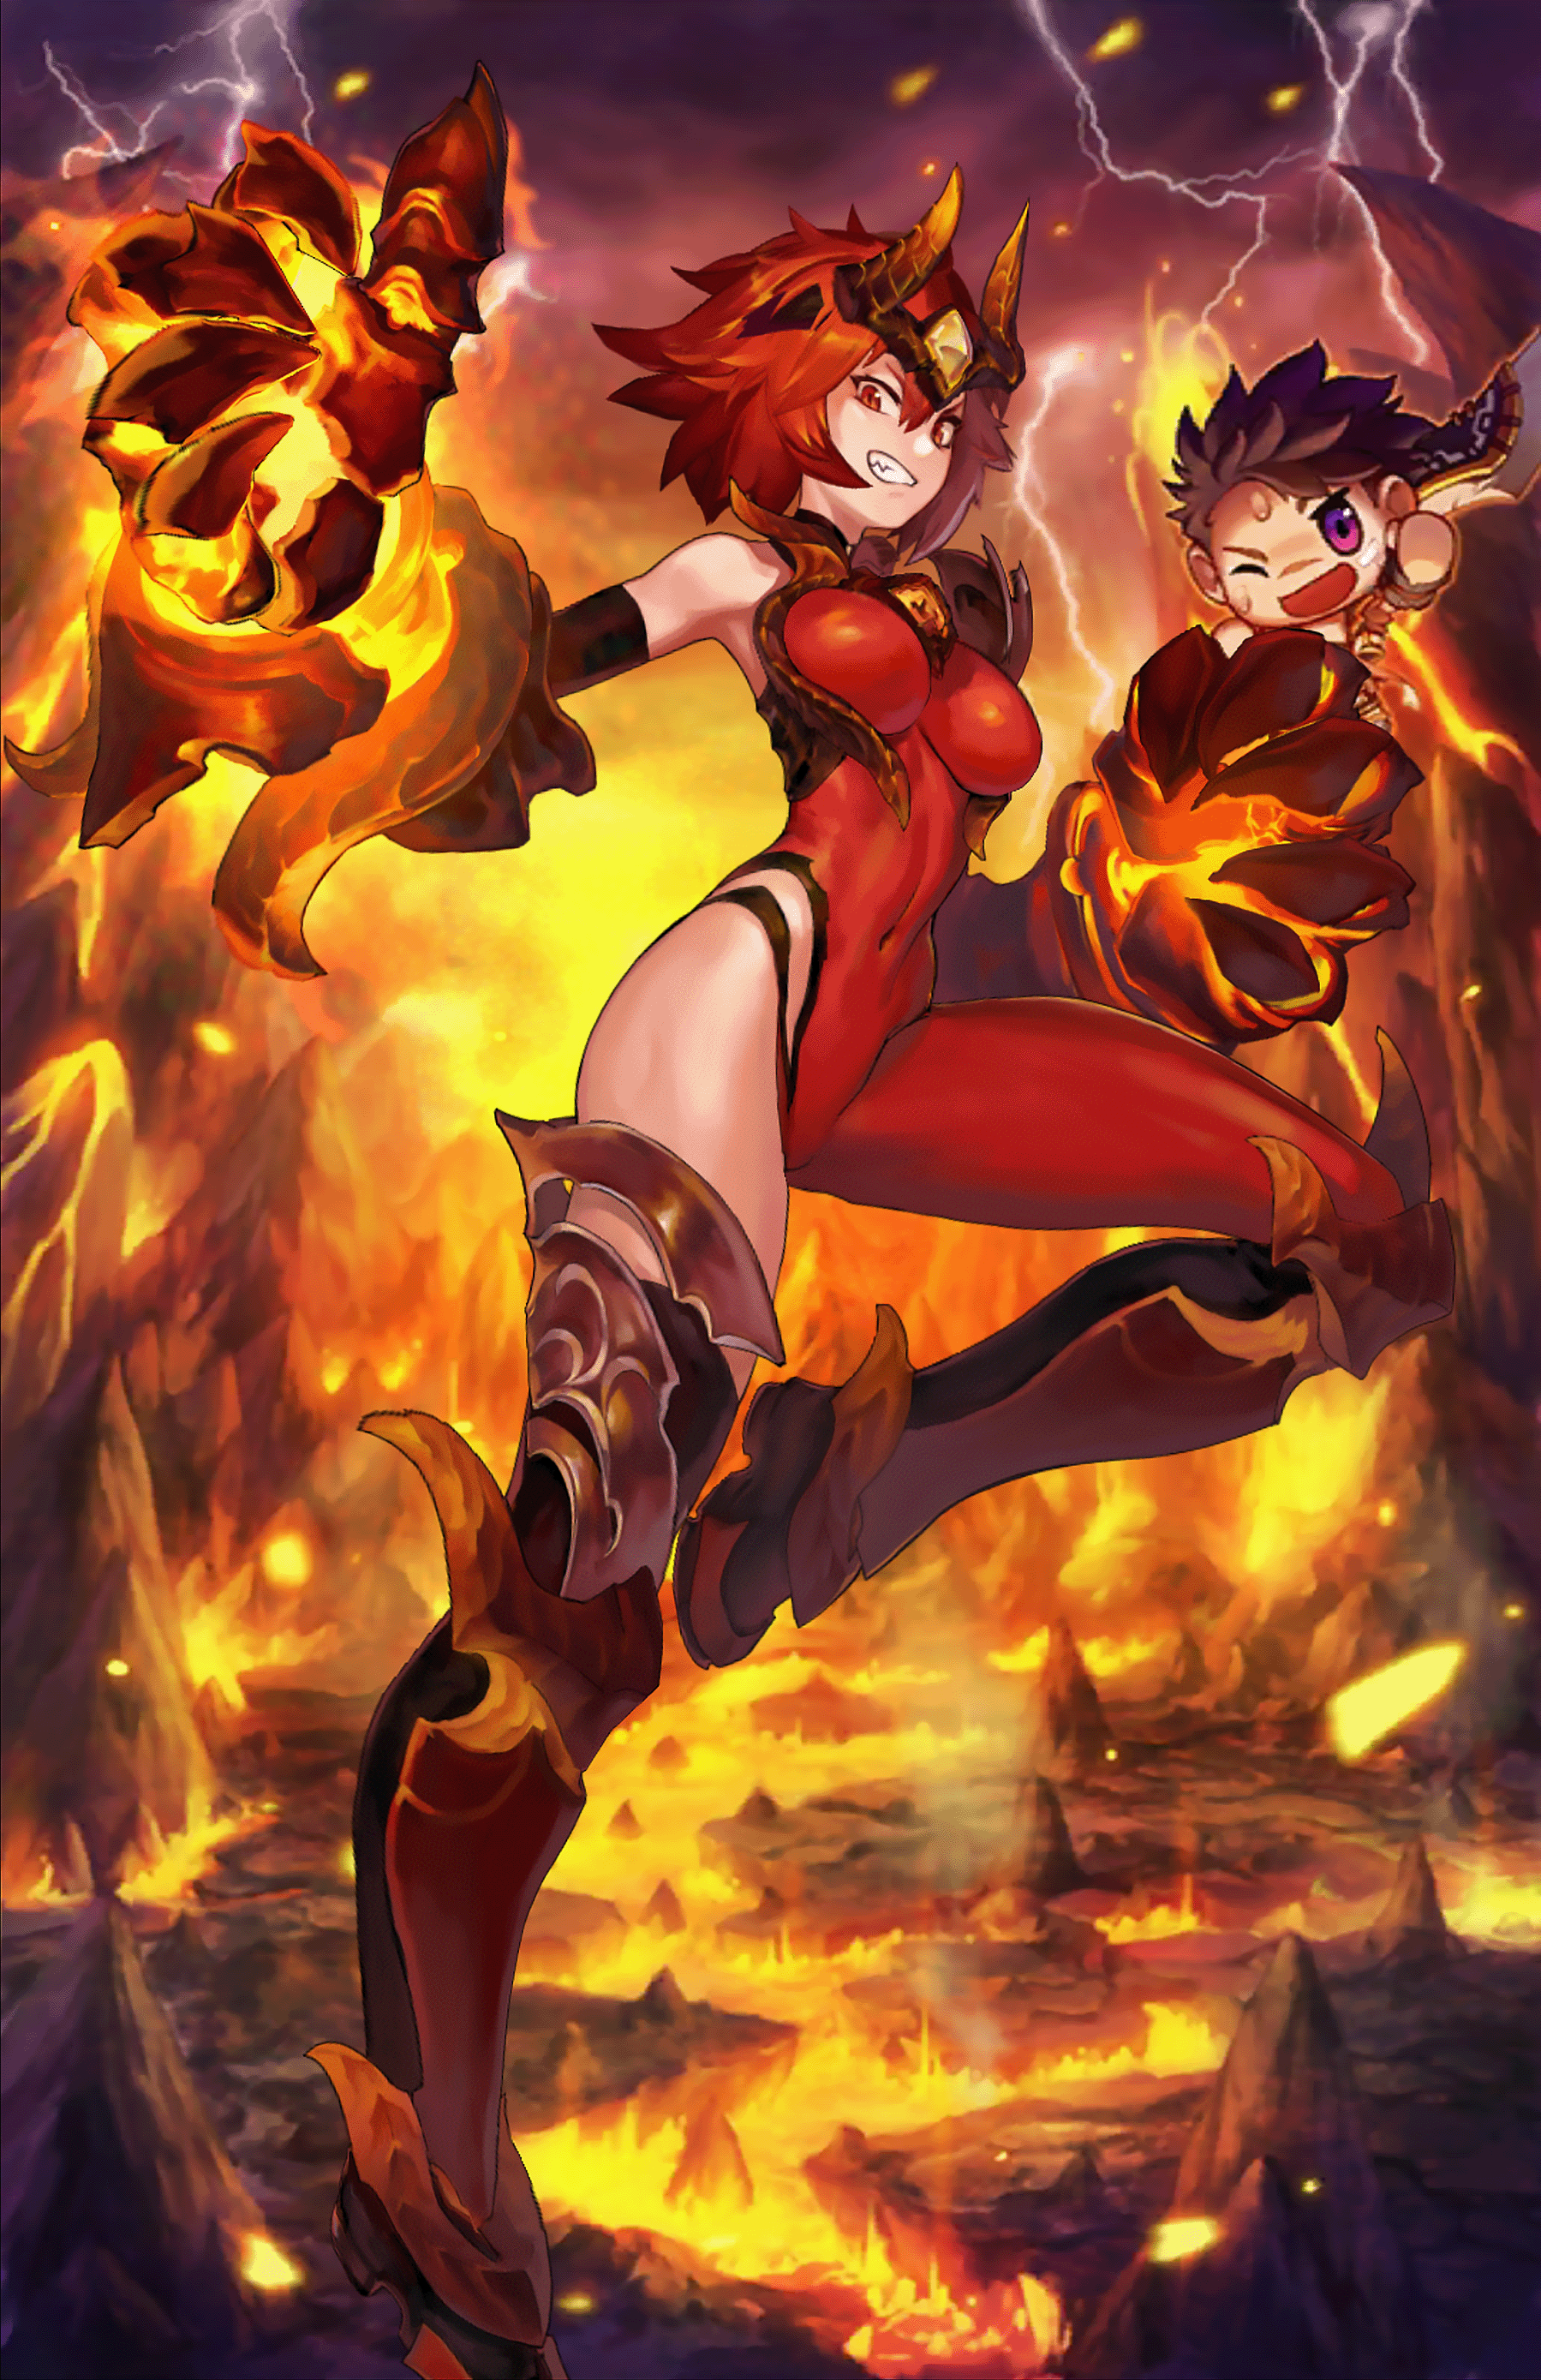 Anime 1799x2778 Guardian Tales Vishuvac (Guardian Tales) anime anime girls slim body smiling redhead fantasy art fantasy girl horns fire burning